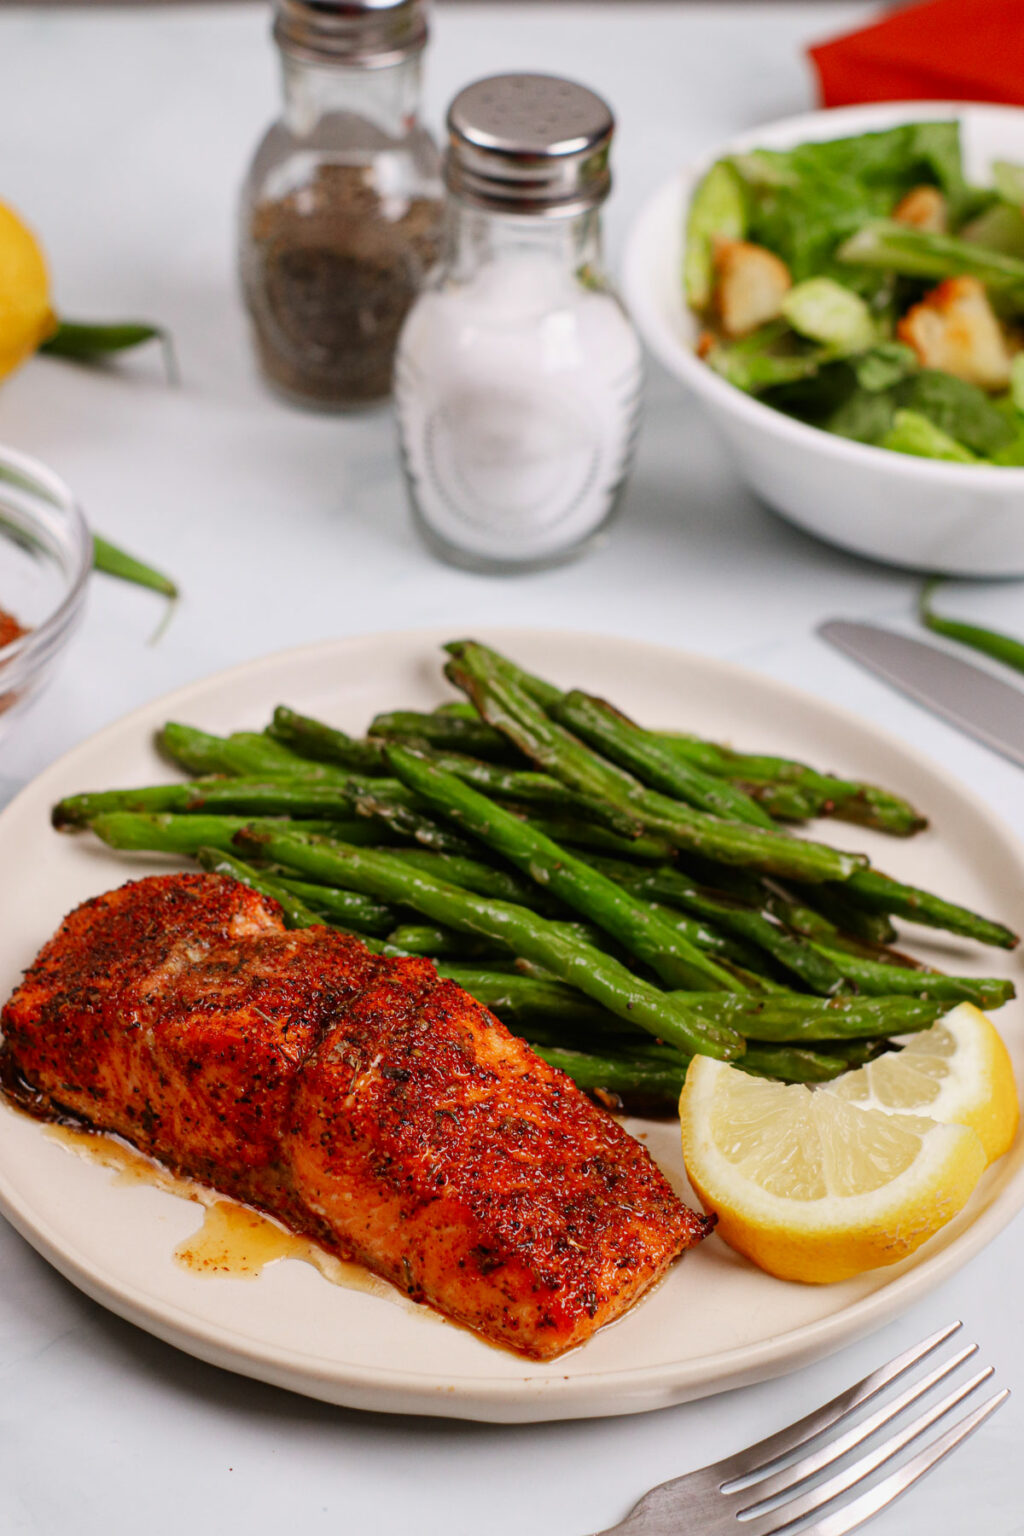 Easy Air Fryer Cajun Salmon Recipe 🍣 Ready in 12 Minutes